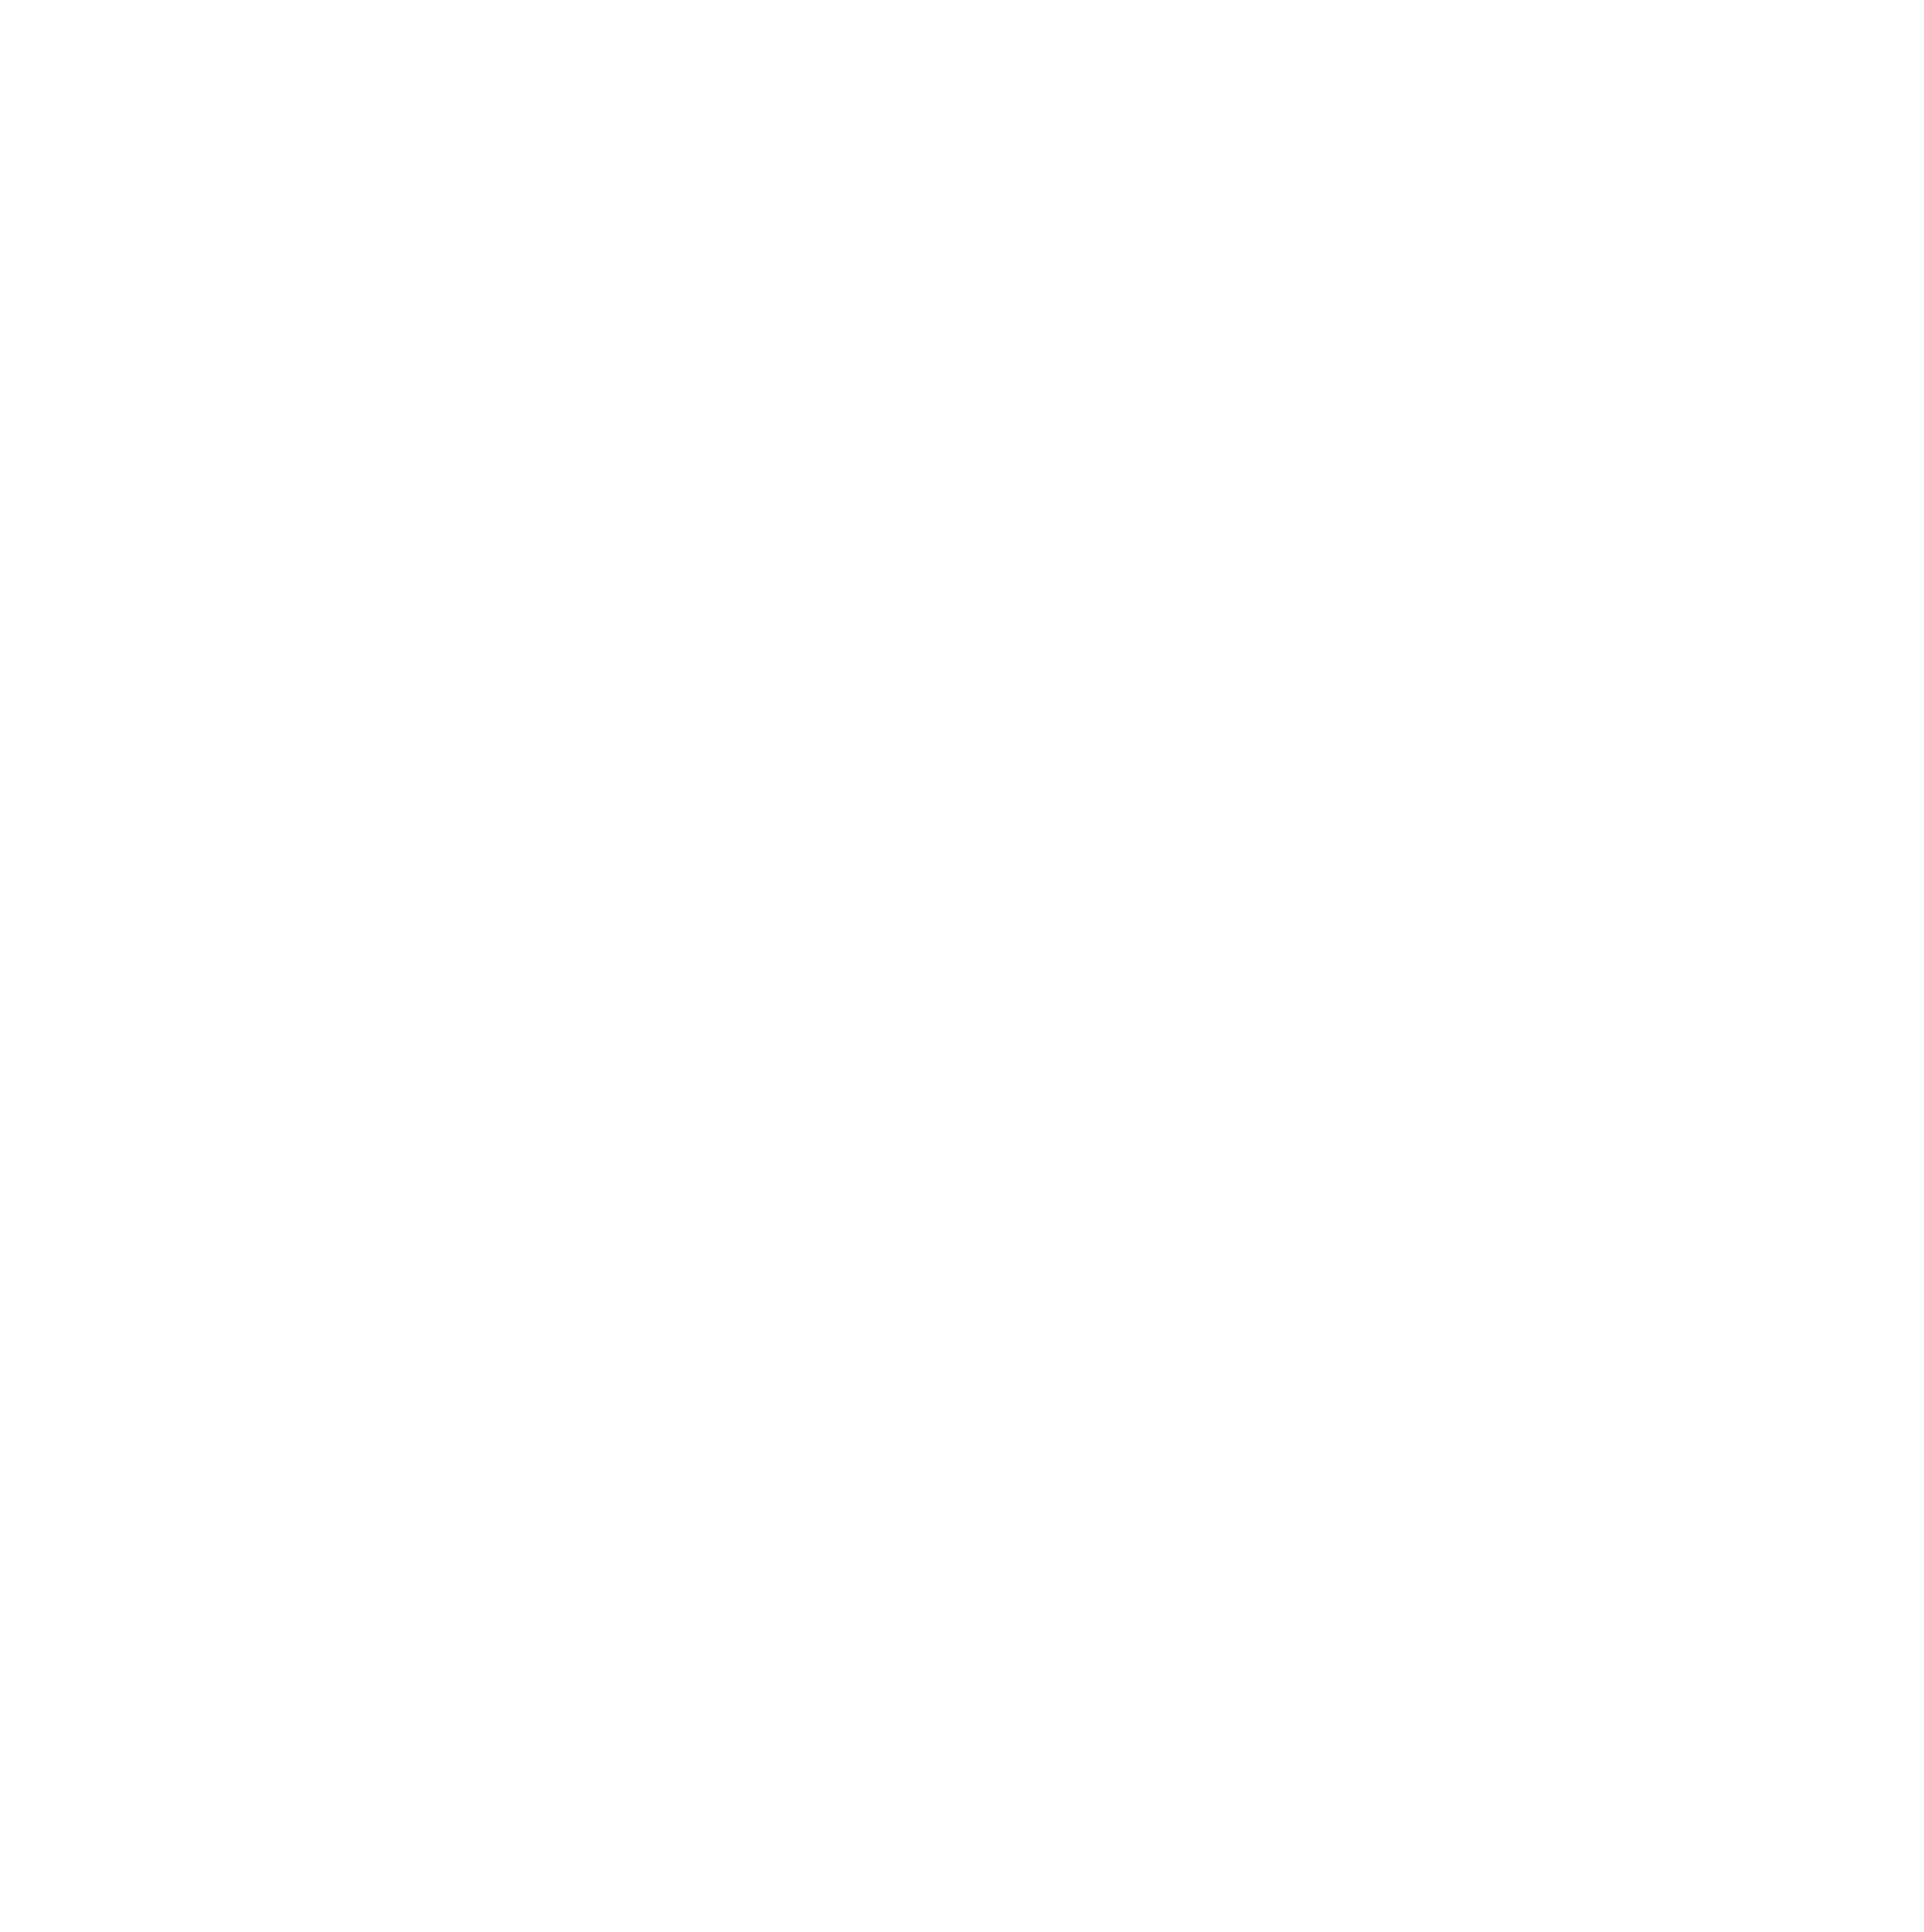 White Microsoft Logo - Microsoft Windows White Logo Png Images